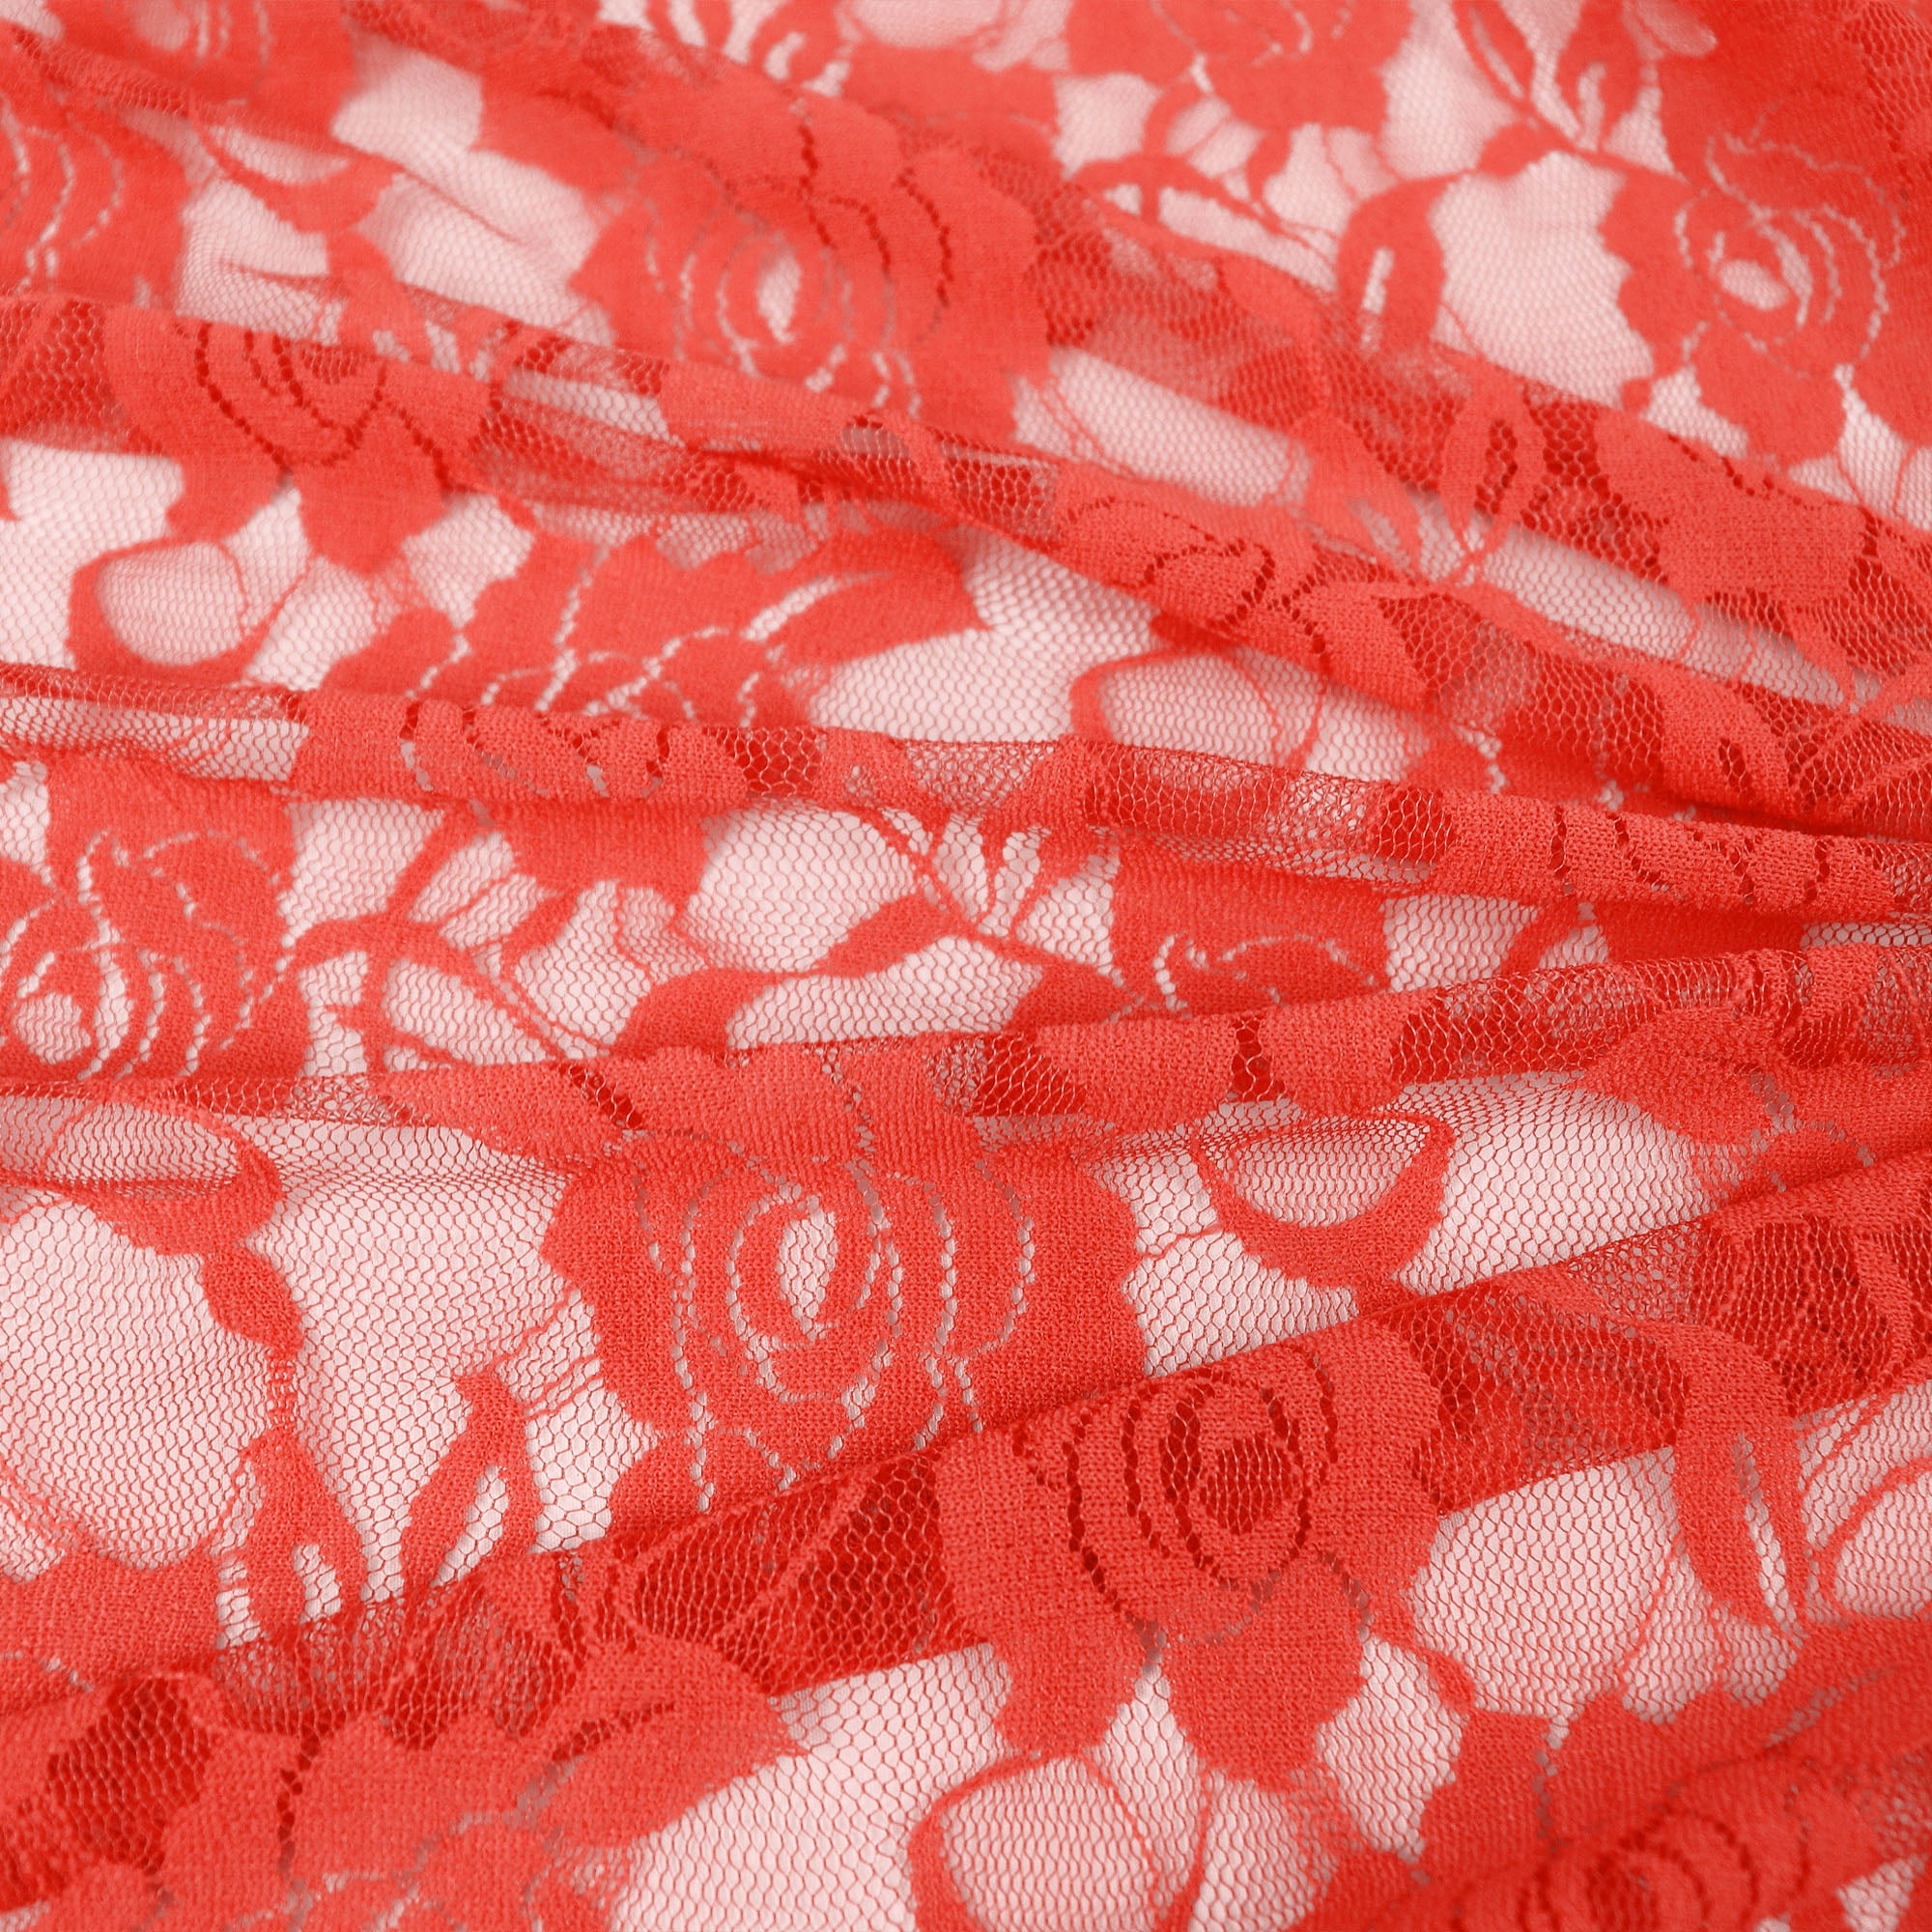 Romex Textiles Nylon Spandex Lace Fabric with Rose Design (3 yards) - Neon  Salmon 